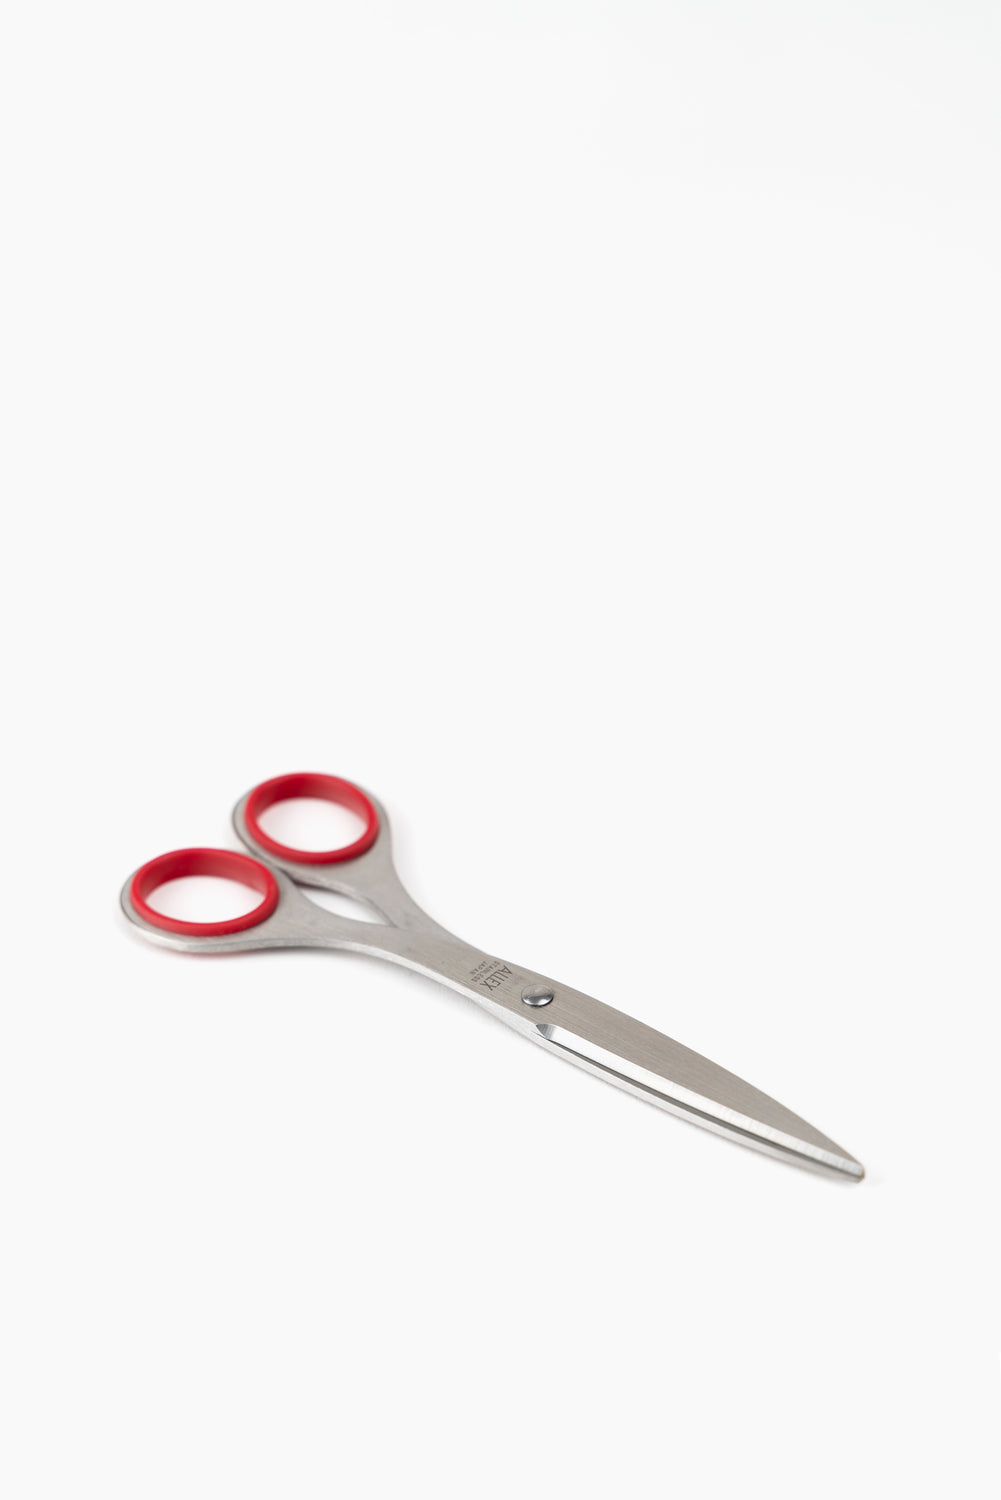 ALLEX Japanese Office Scissors for Desk, Small 5.3 All Purpose